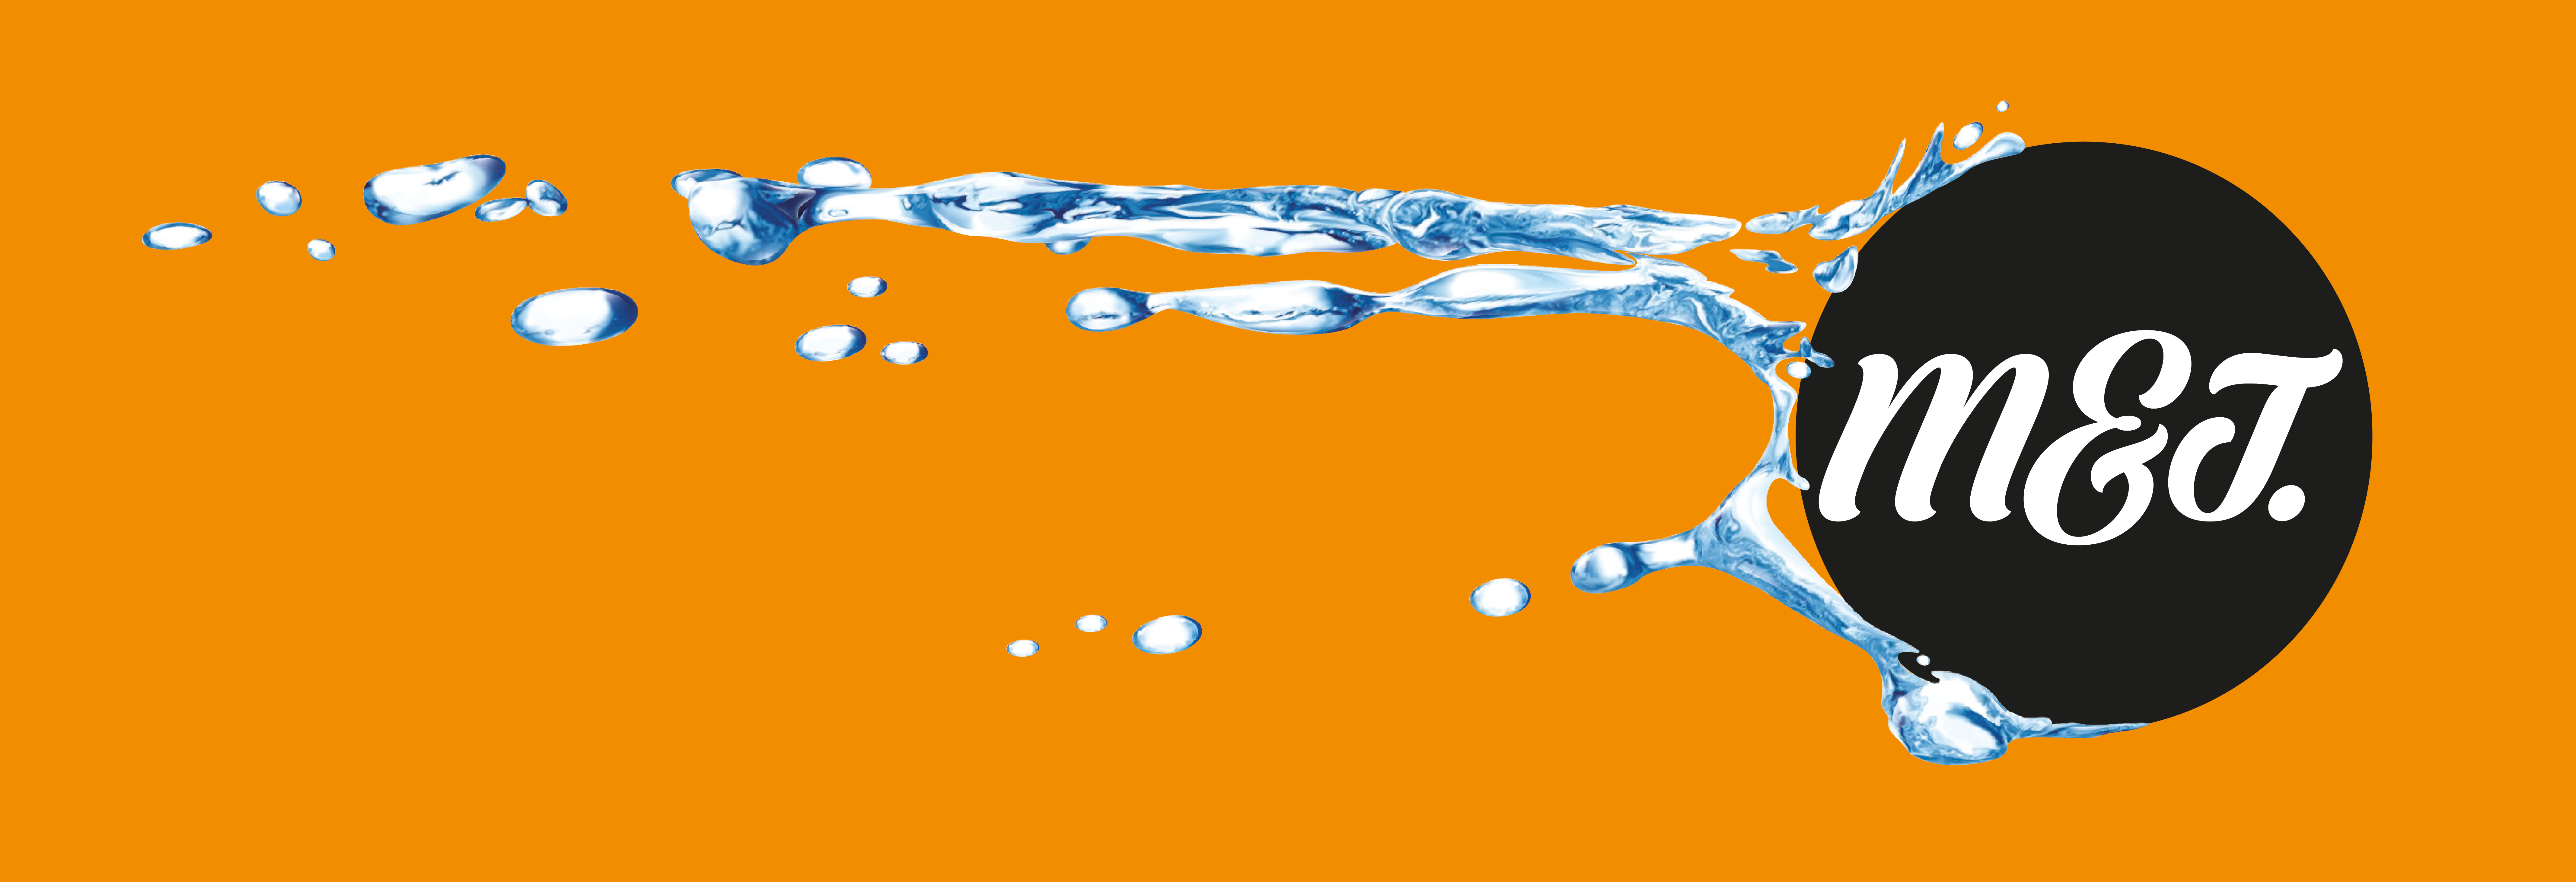 splash_orange6